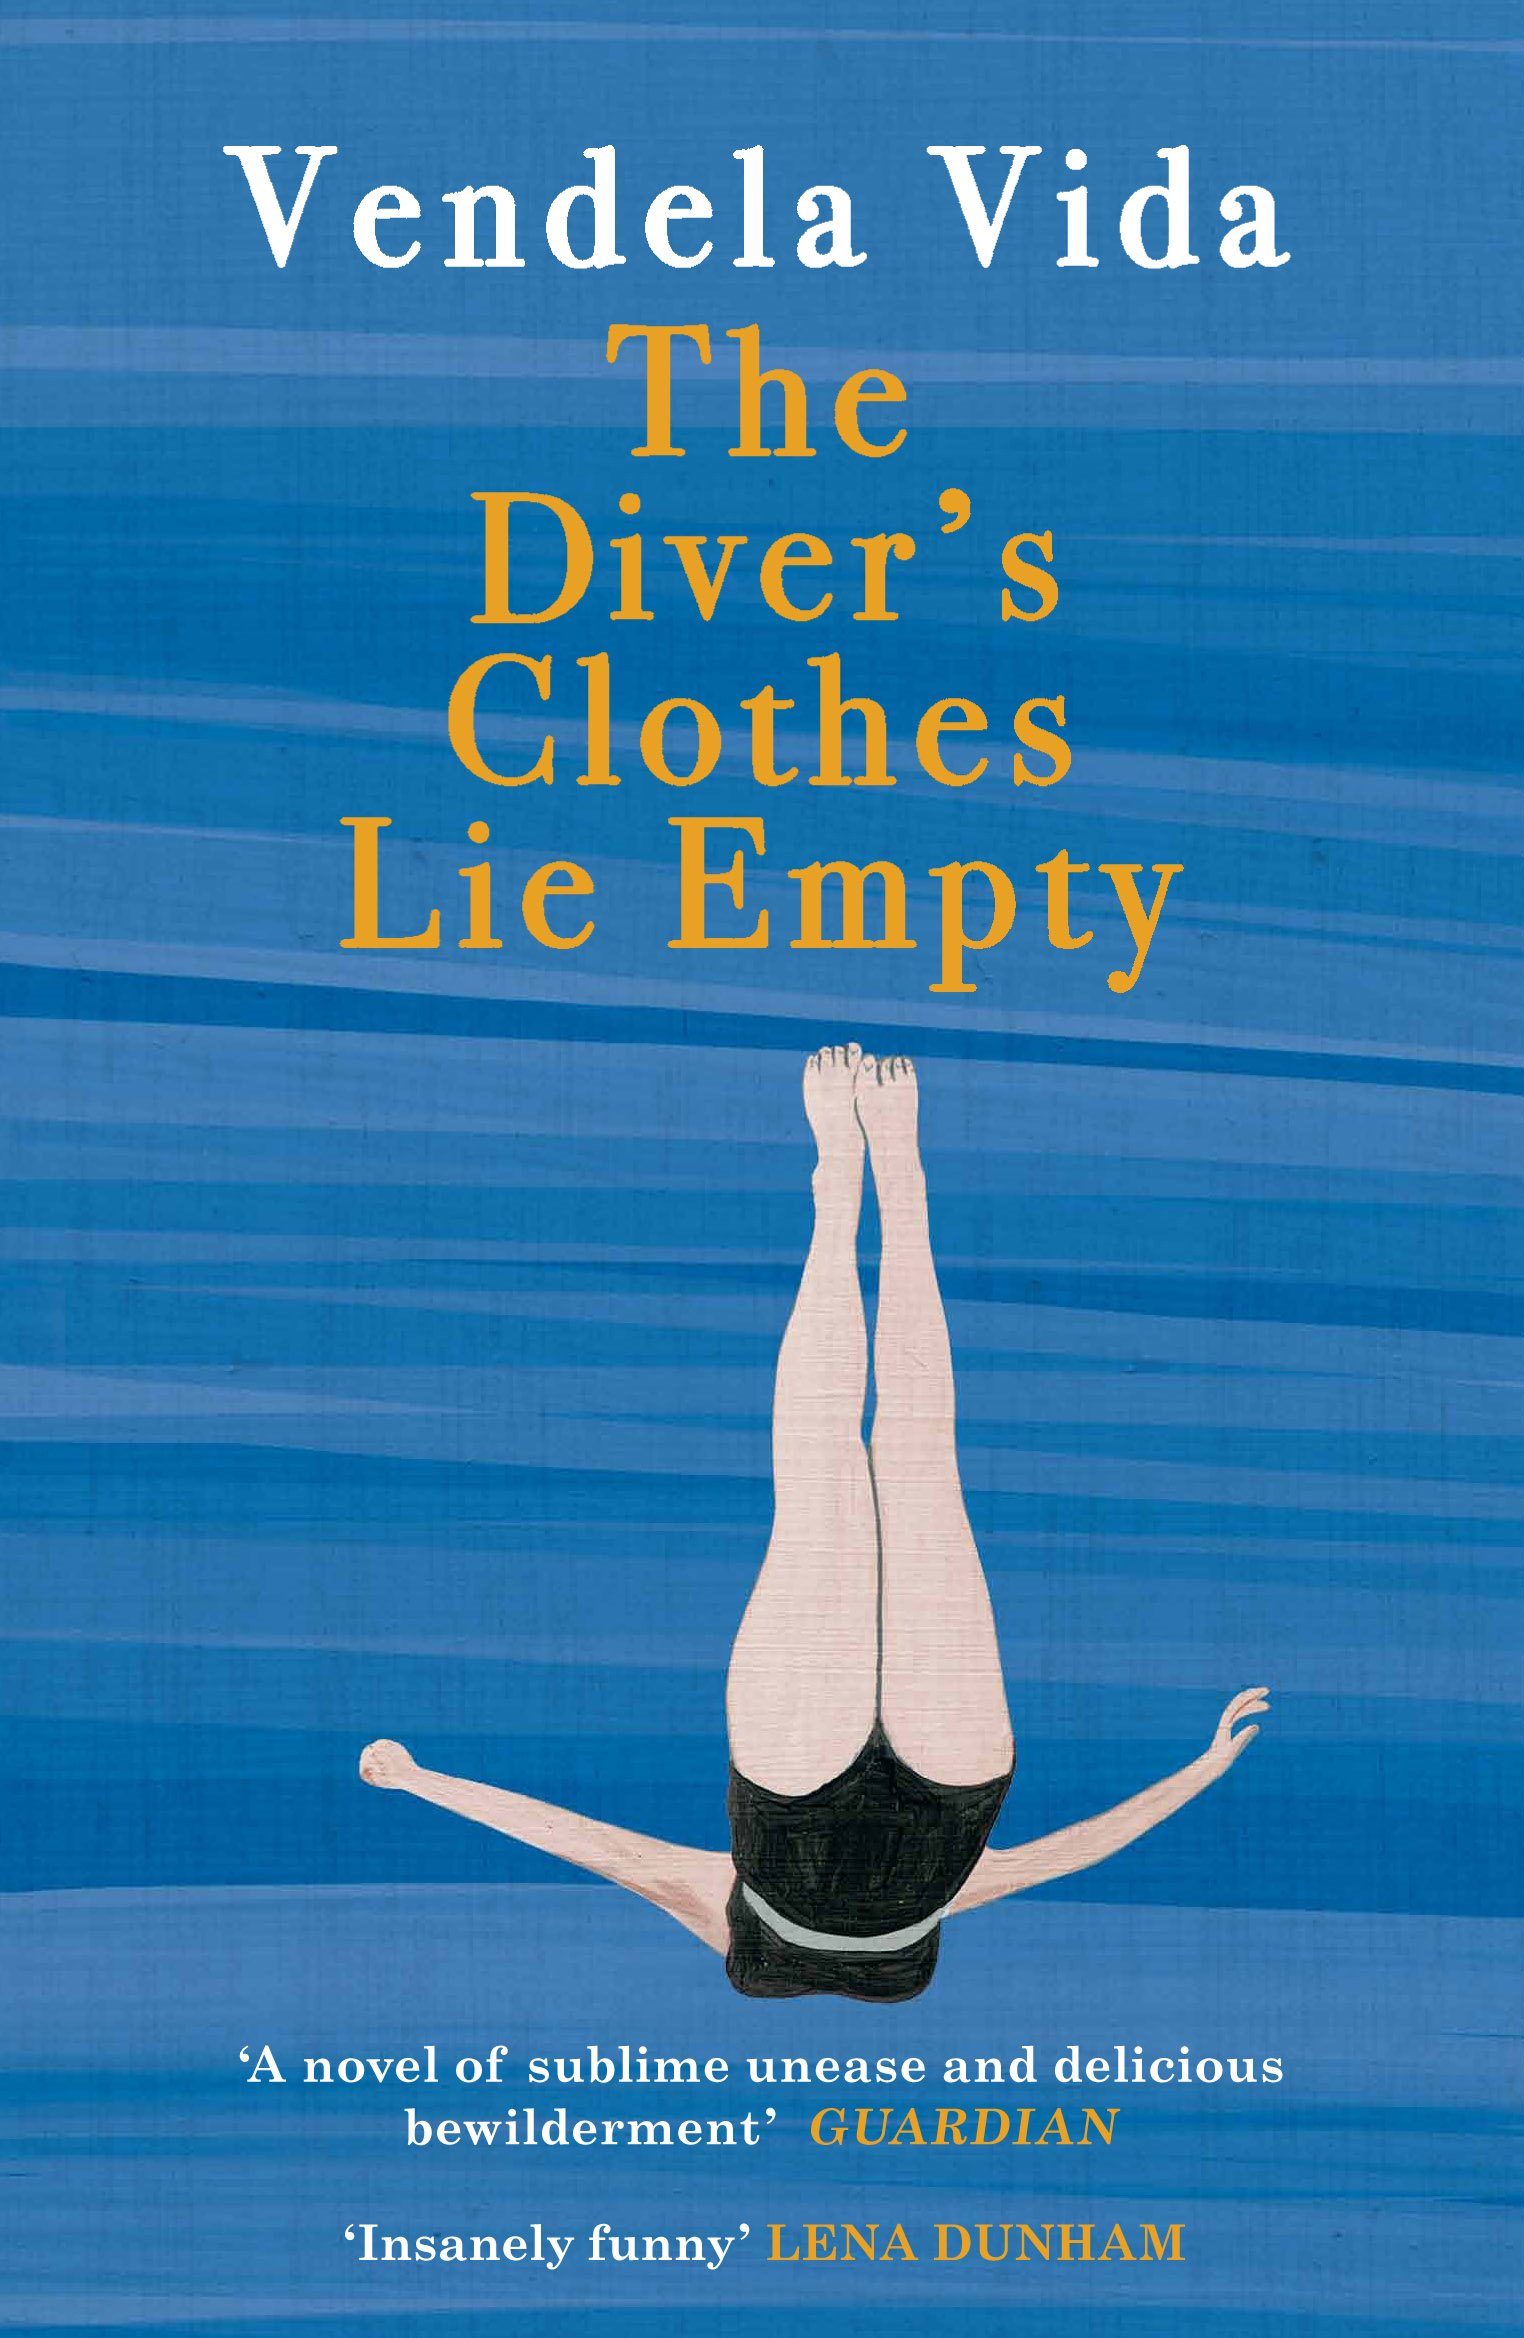 The Diver's Clothes Lie Empty | Vendela Vida